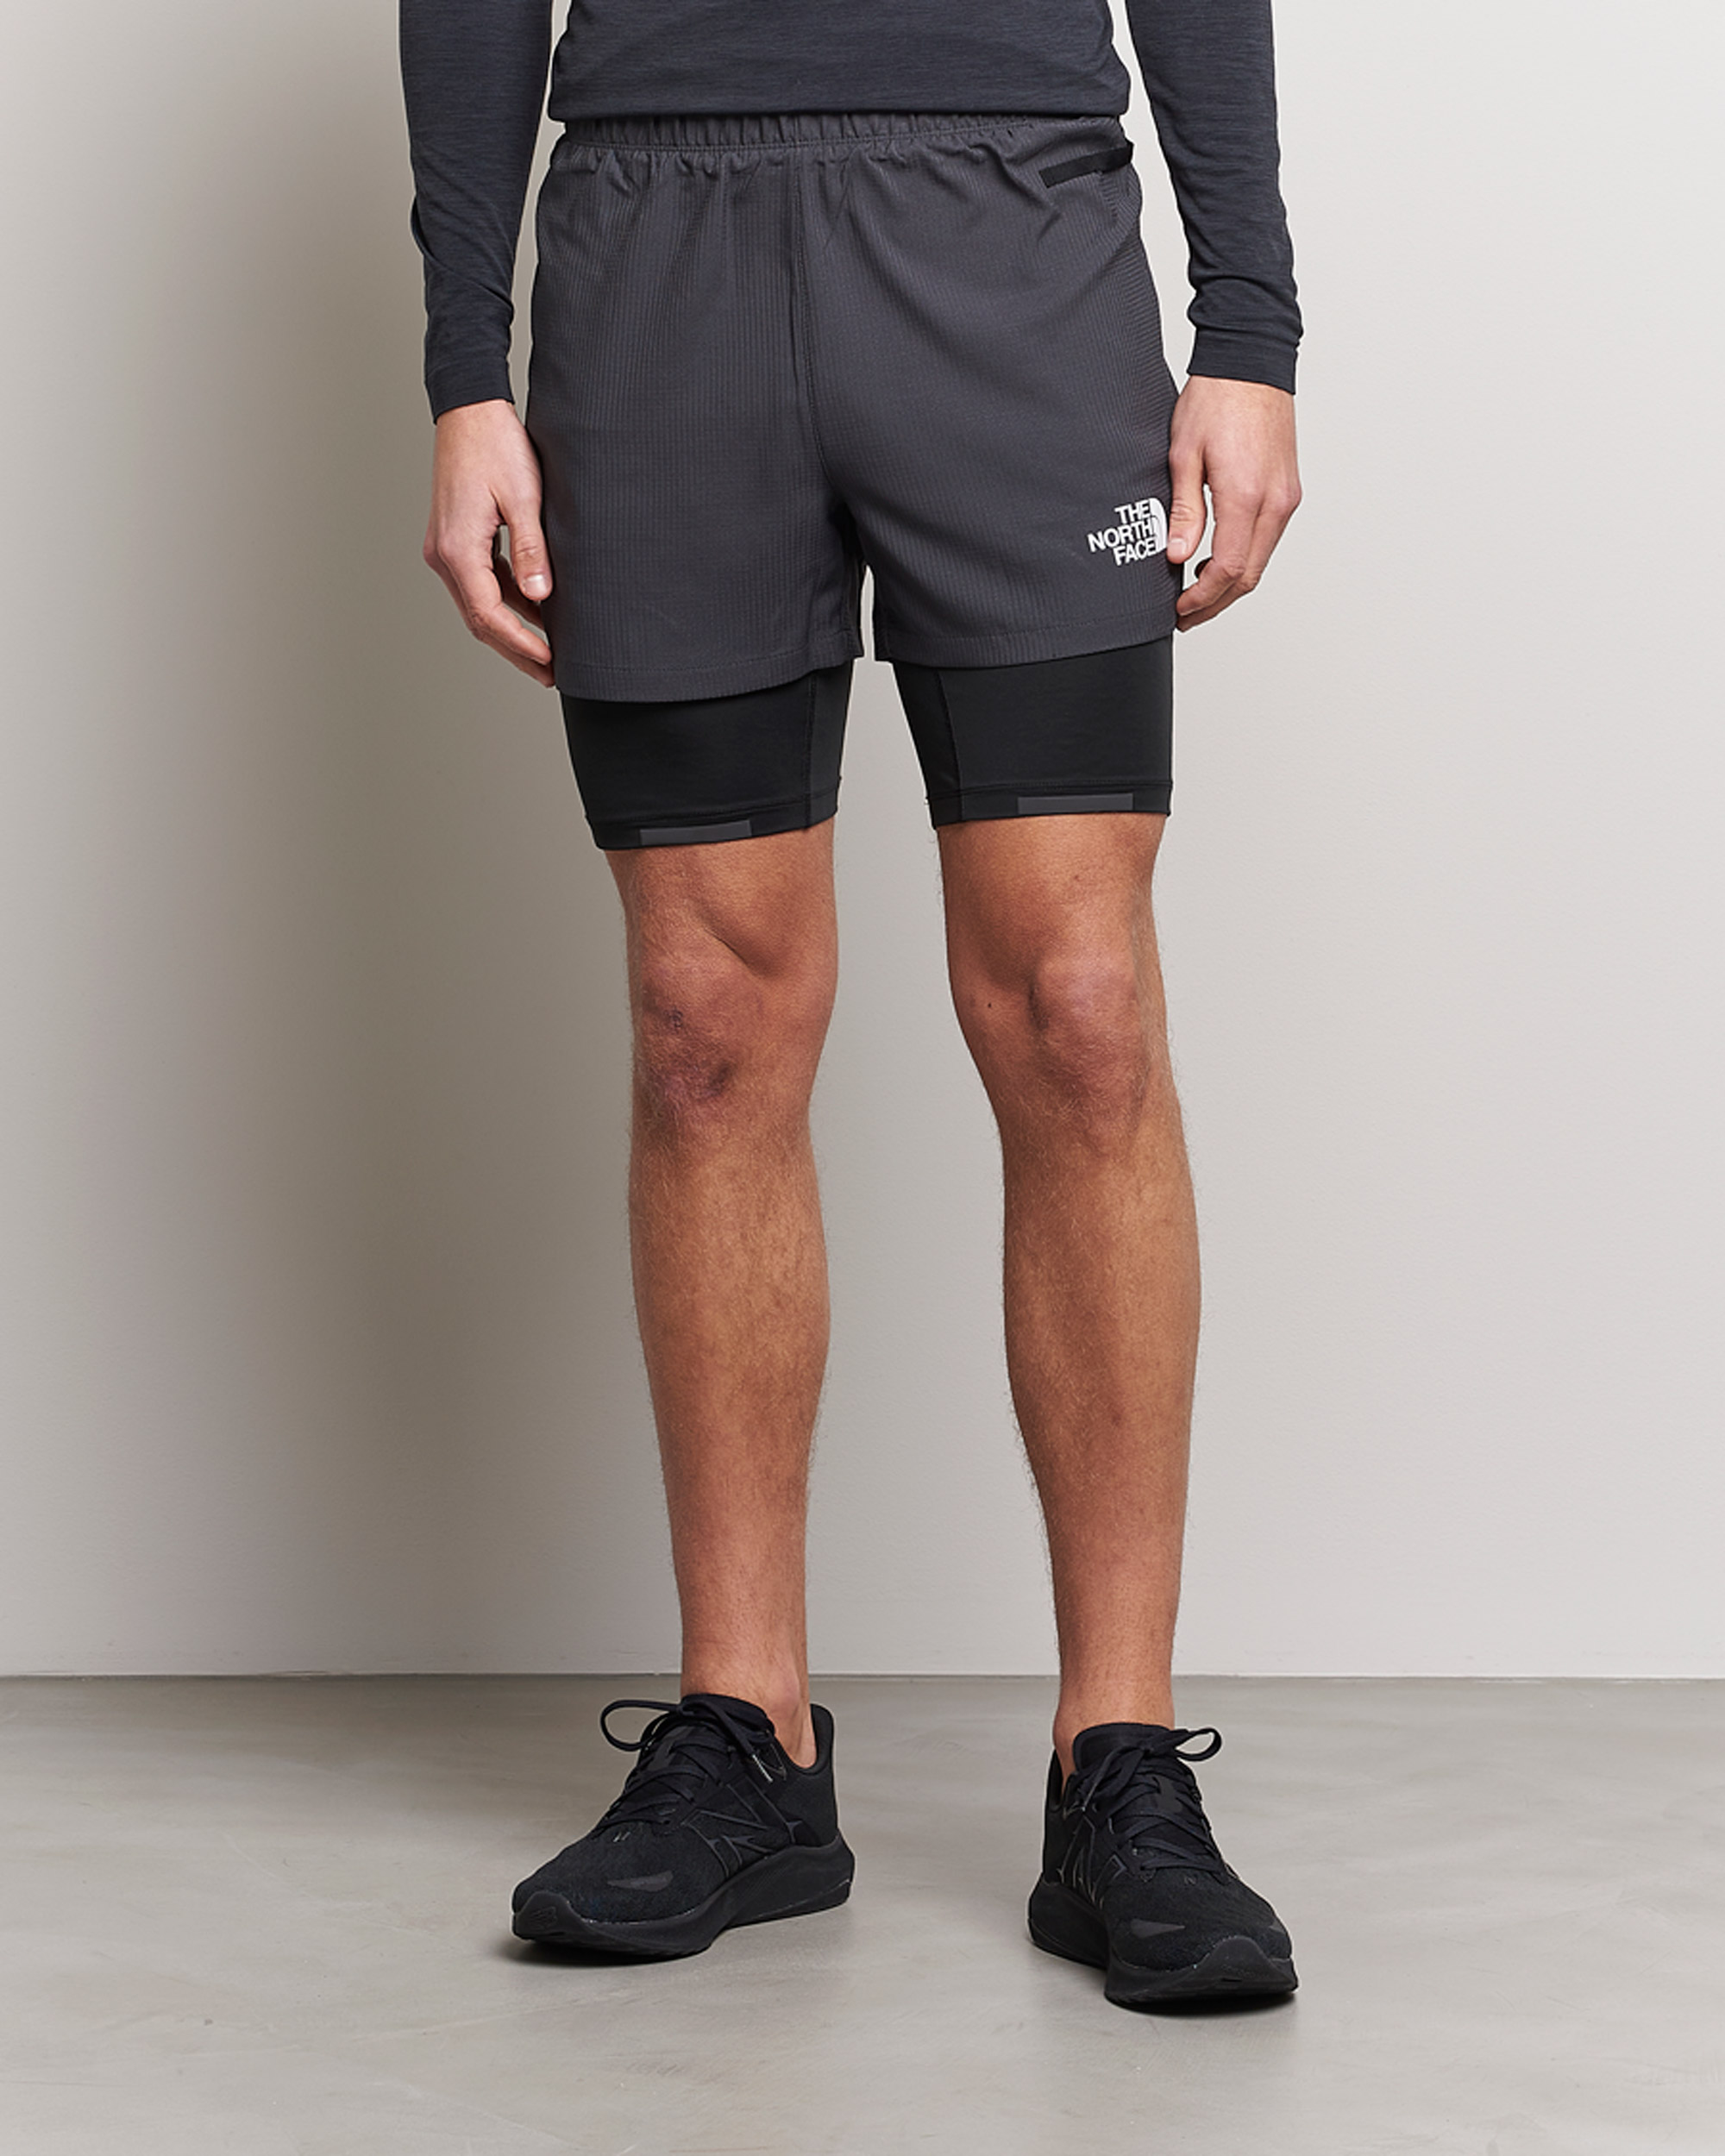 Mies | The North Face | The North Face | Mountain Athletics Dual Shorts Black/Asphalt